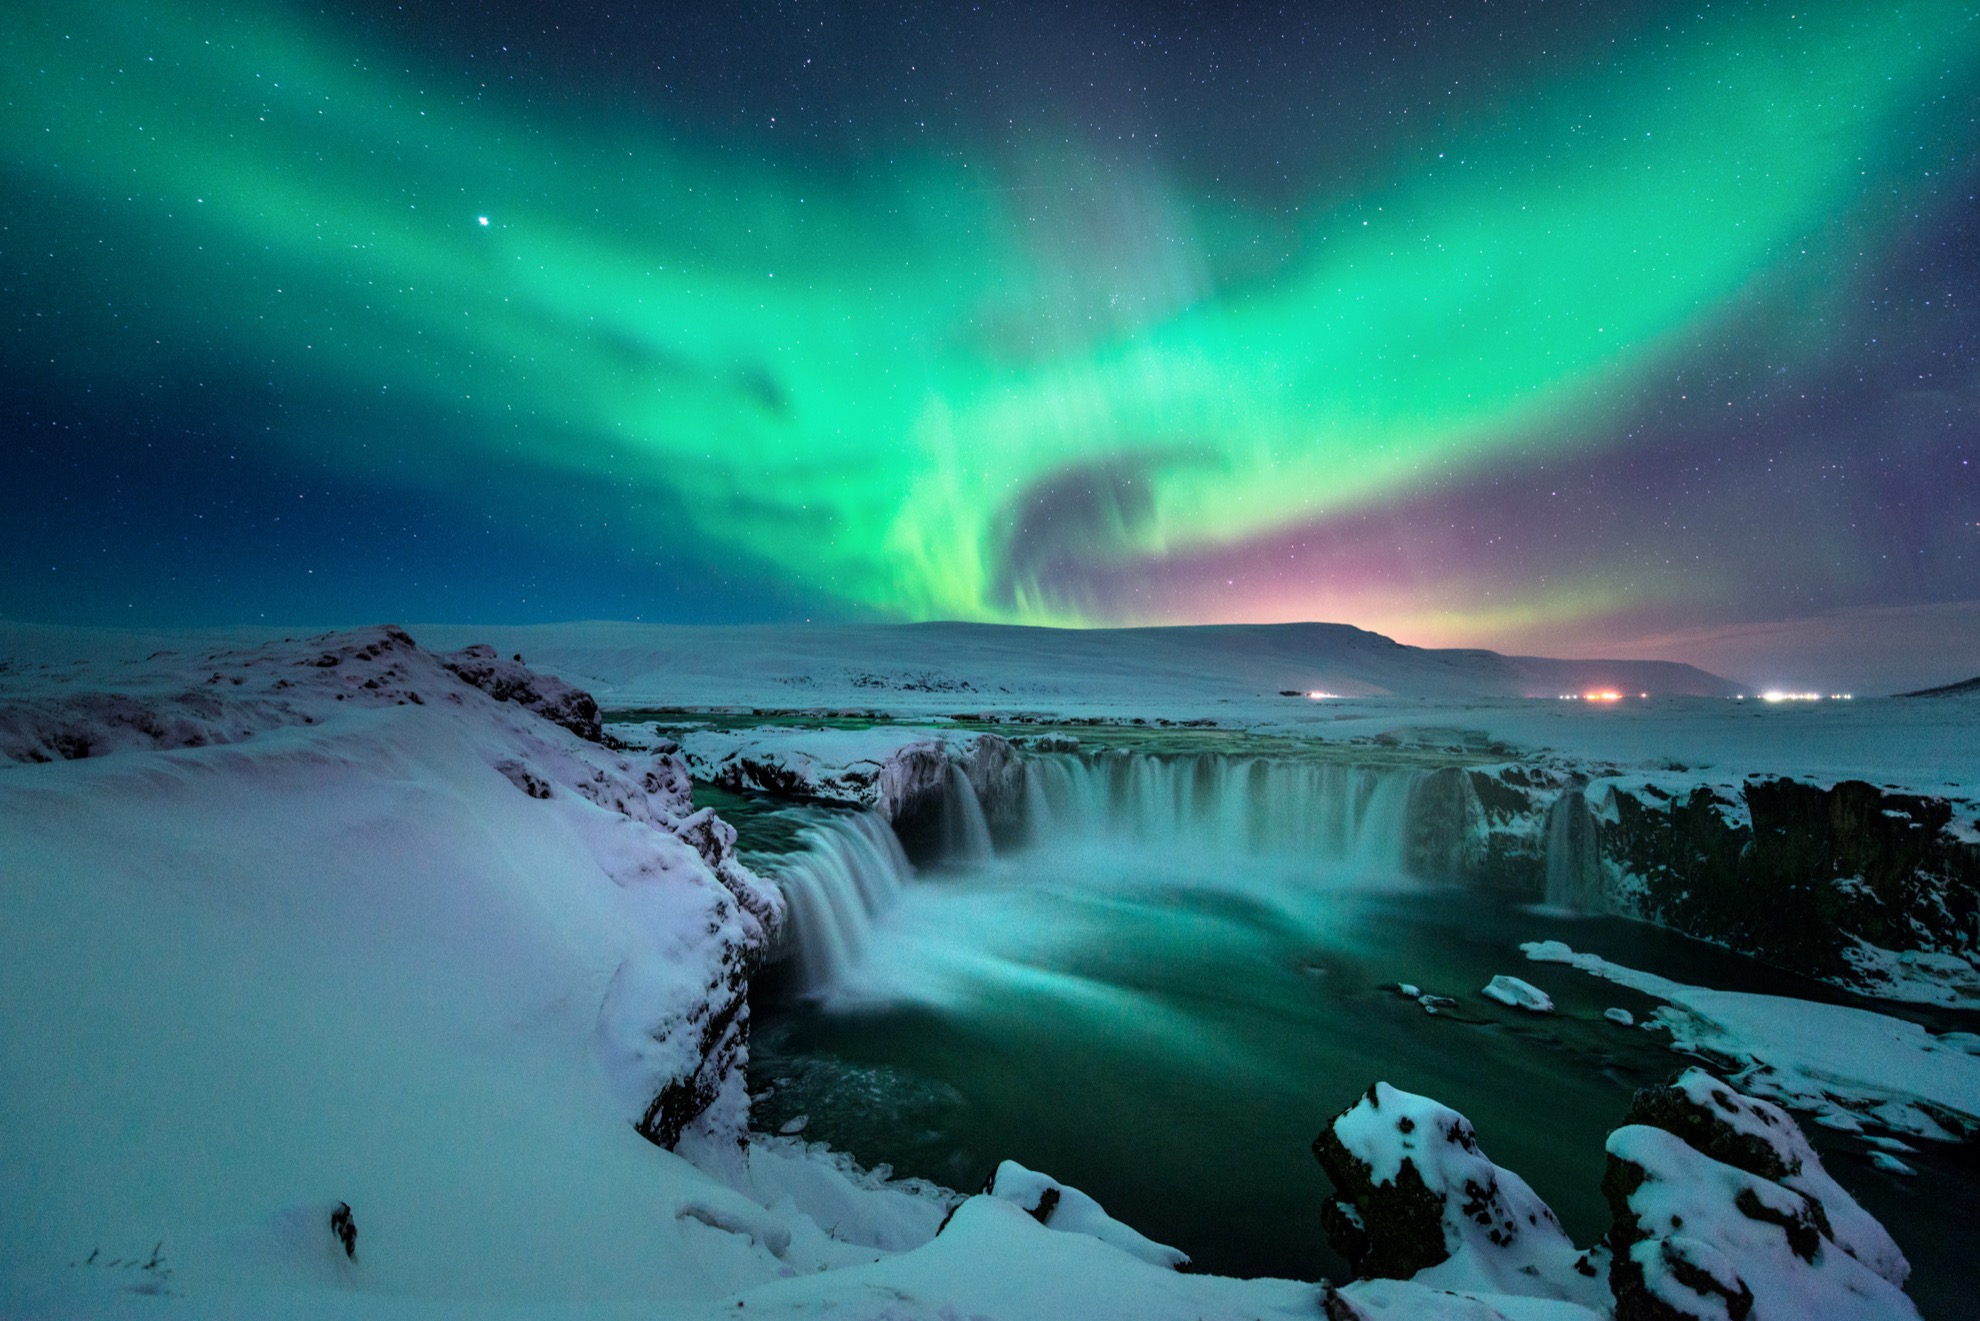 11 Hechos rápidos sobre Godafoss: la cascada mítica de Islandia - 9